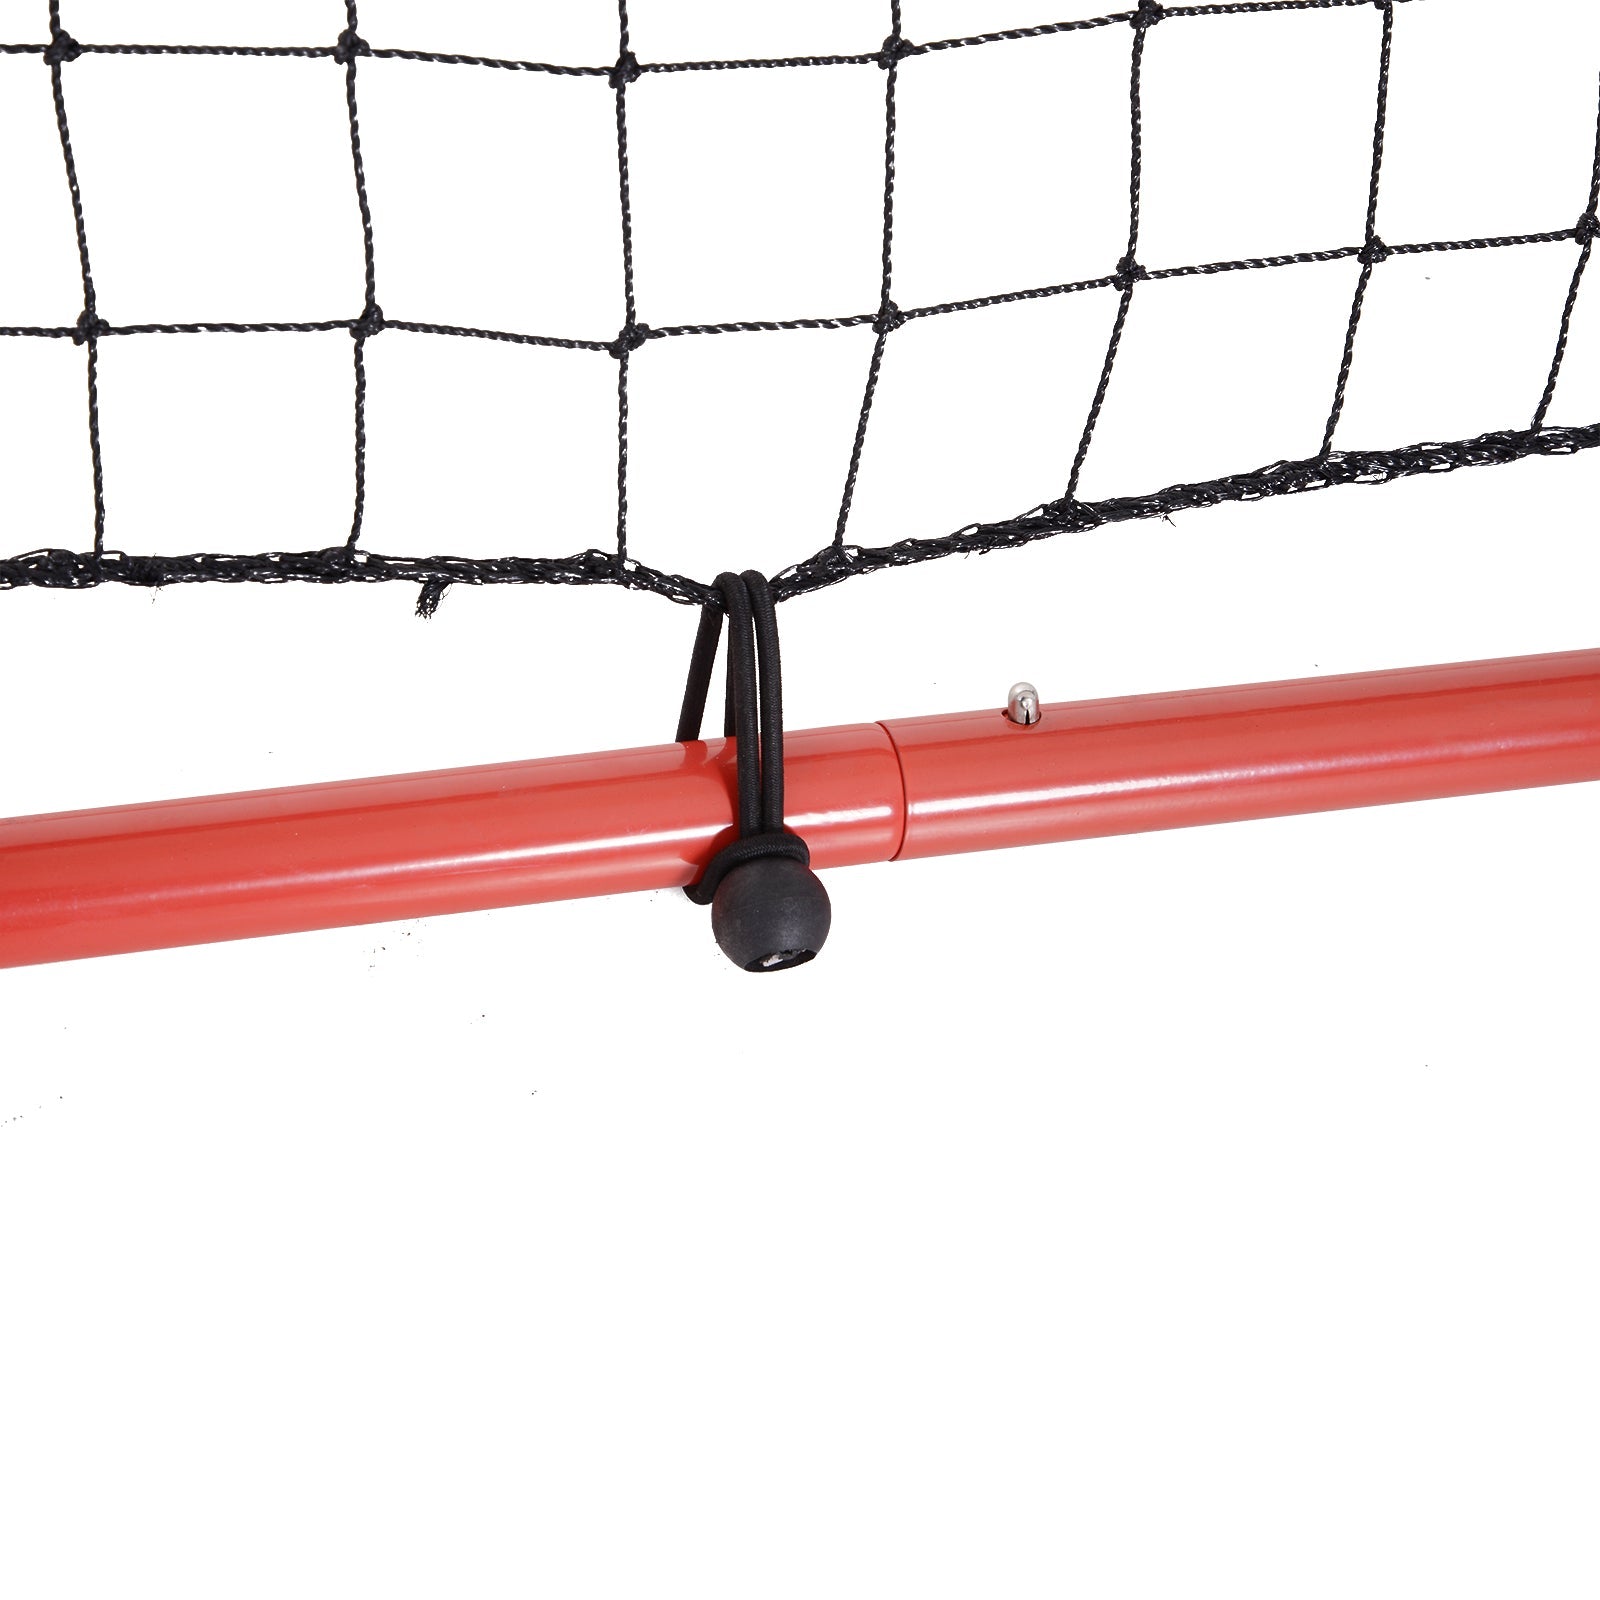 Soccer Training Net Aid Football Kickback Target Goal Play Adjustable, Red at Gallery Canada